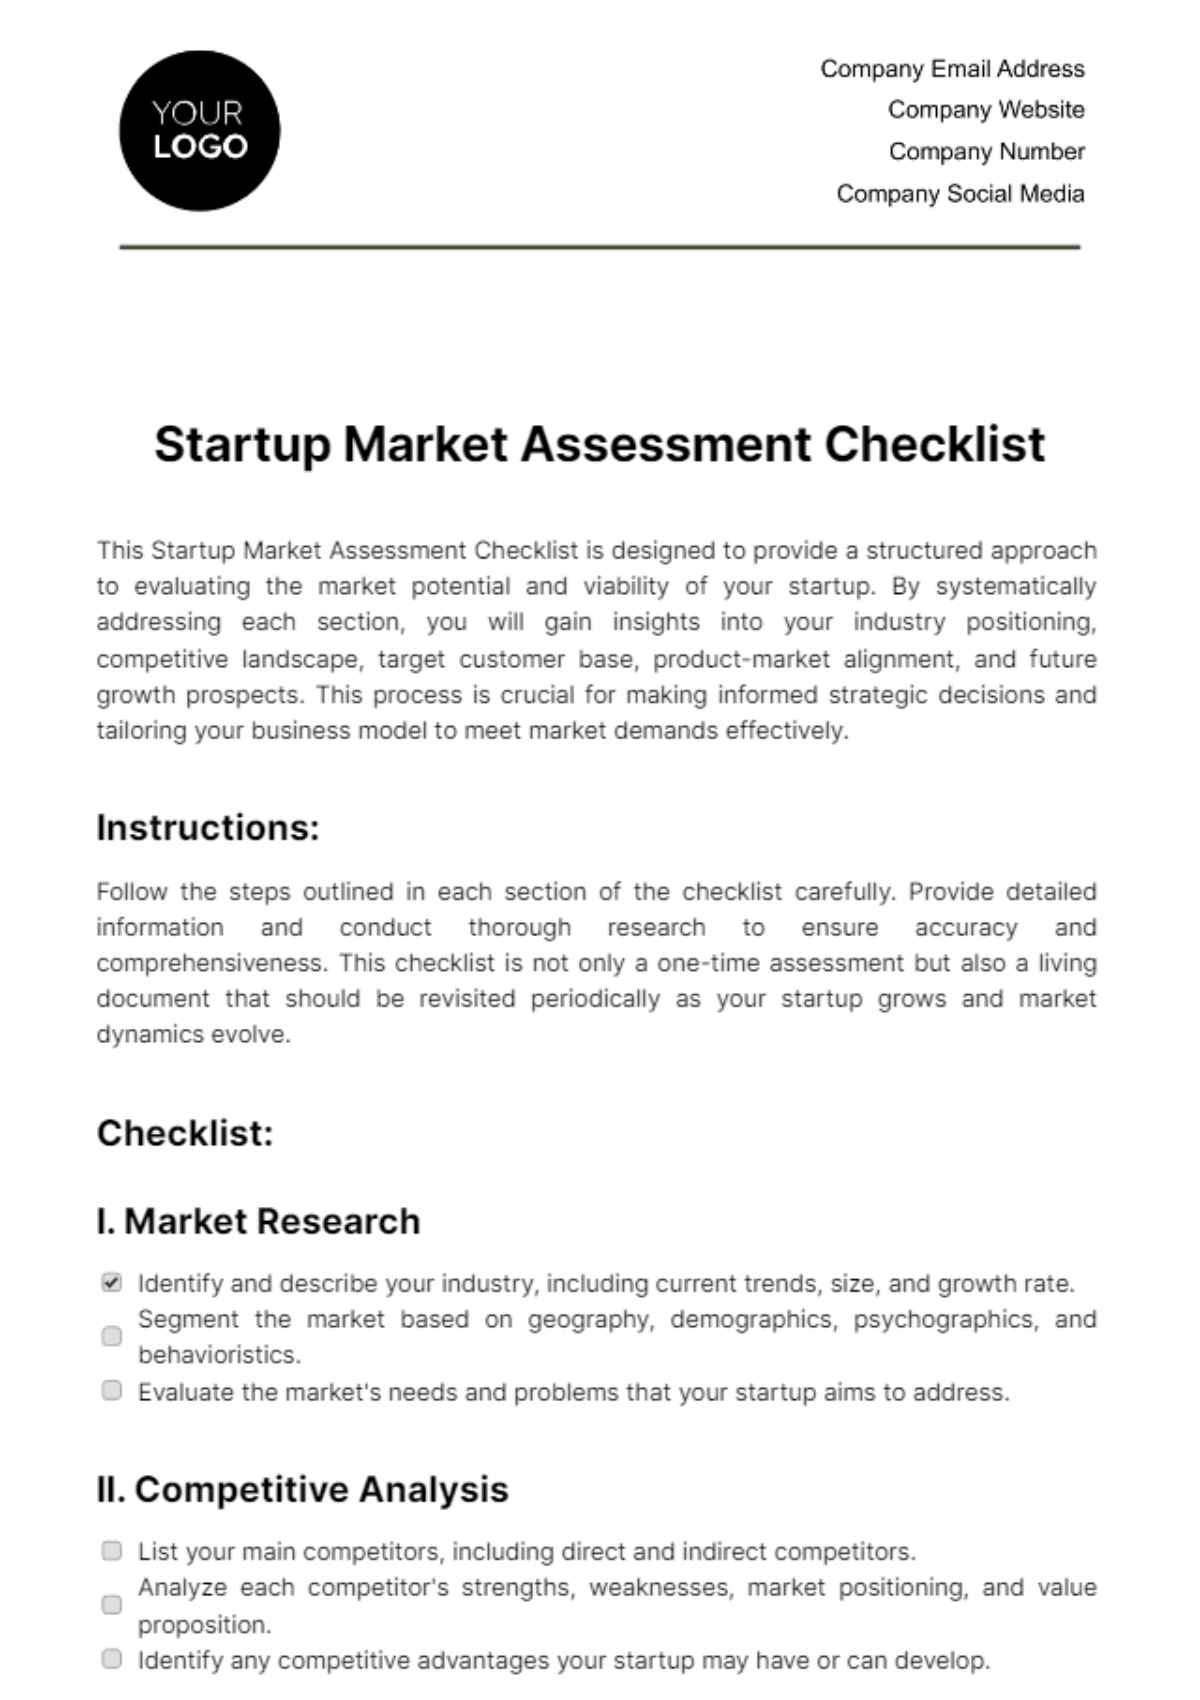 Startup Market Assessment Checklist Template